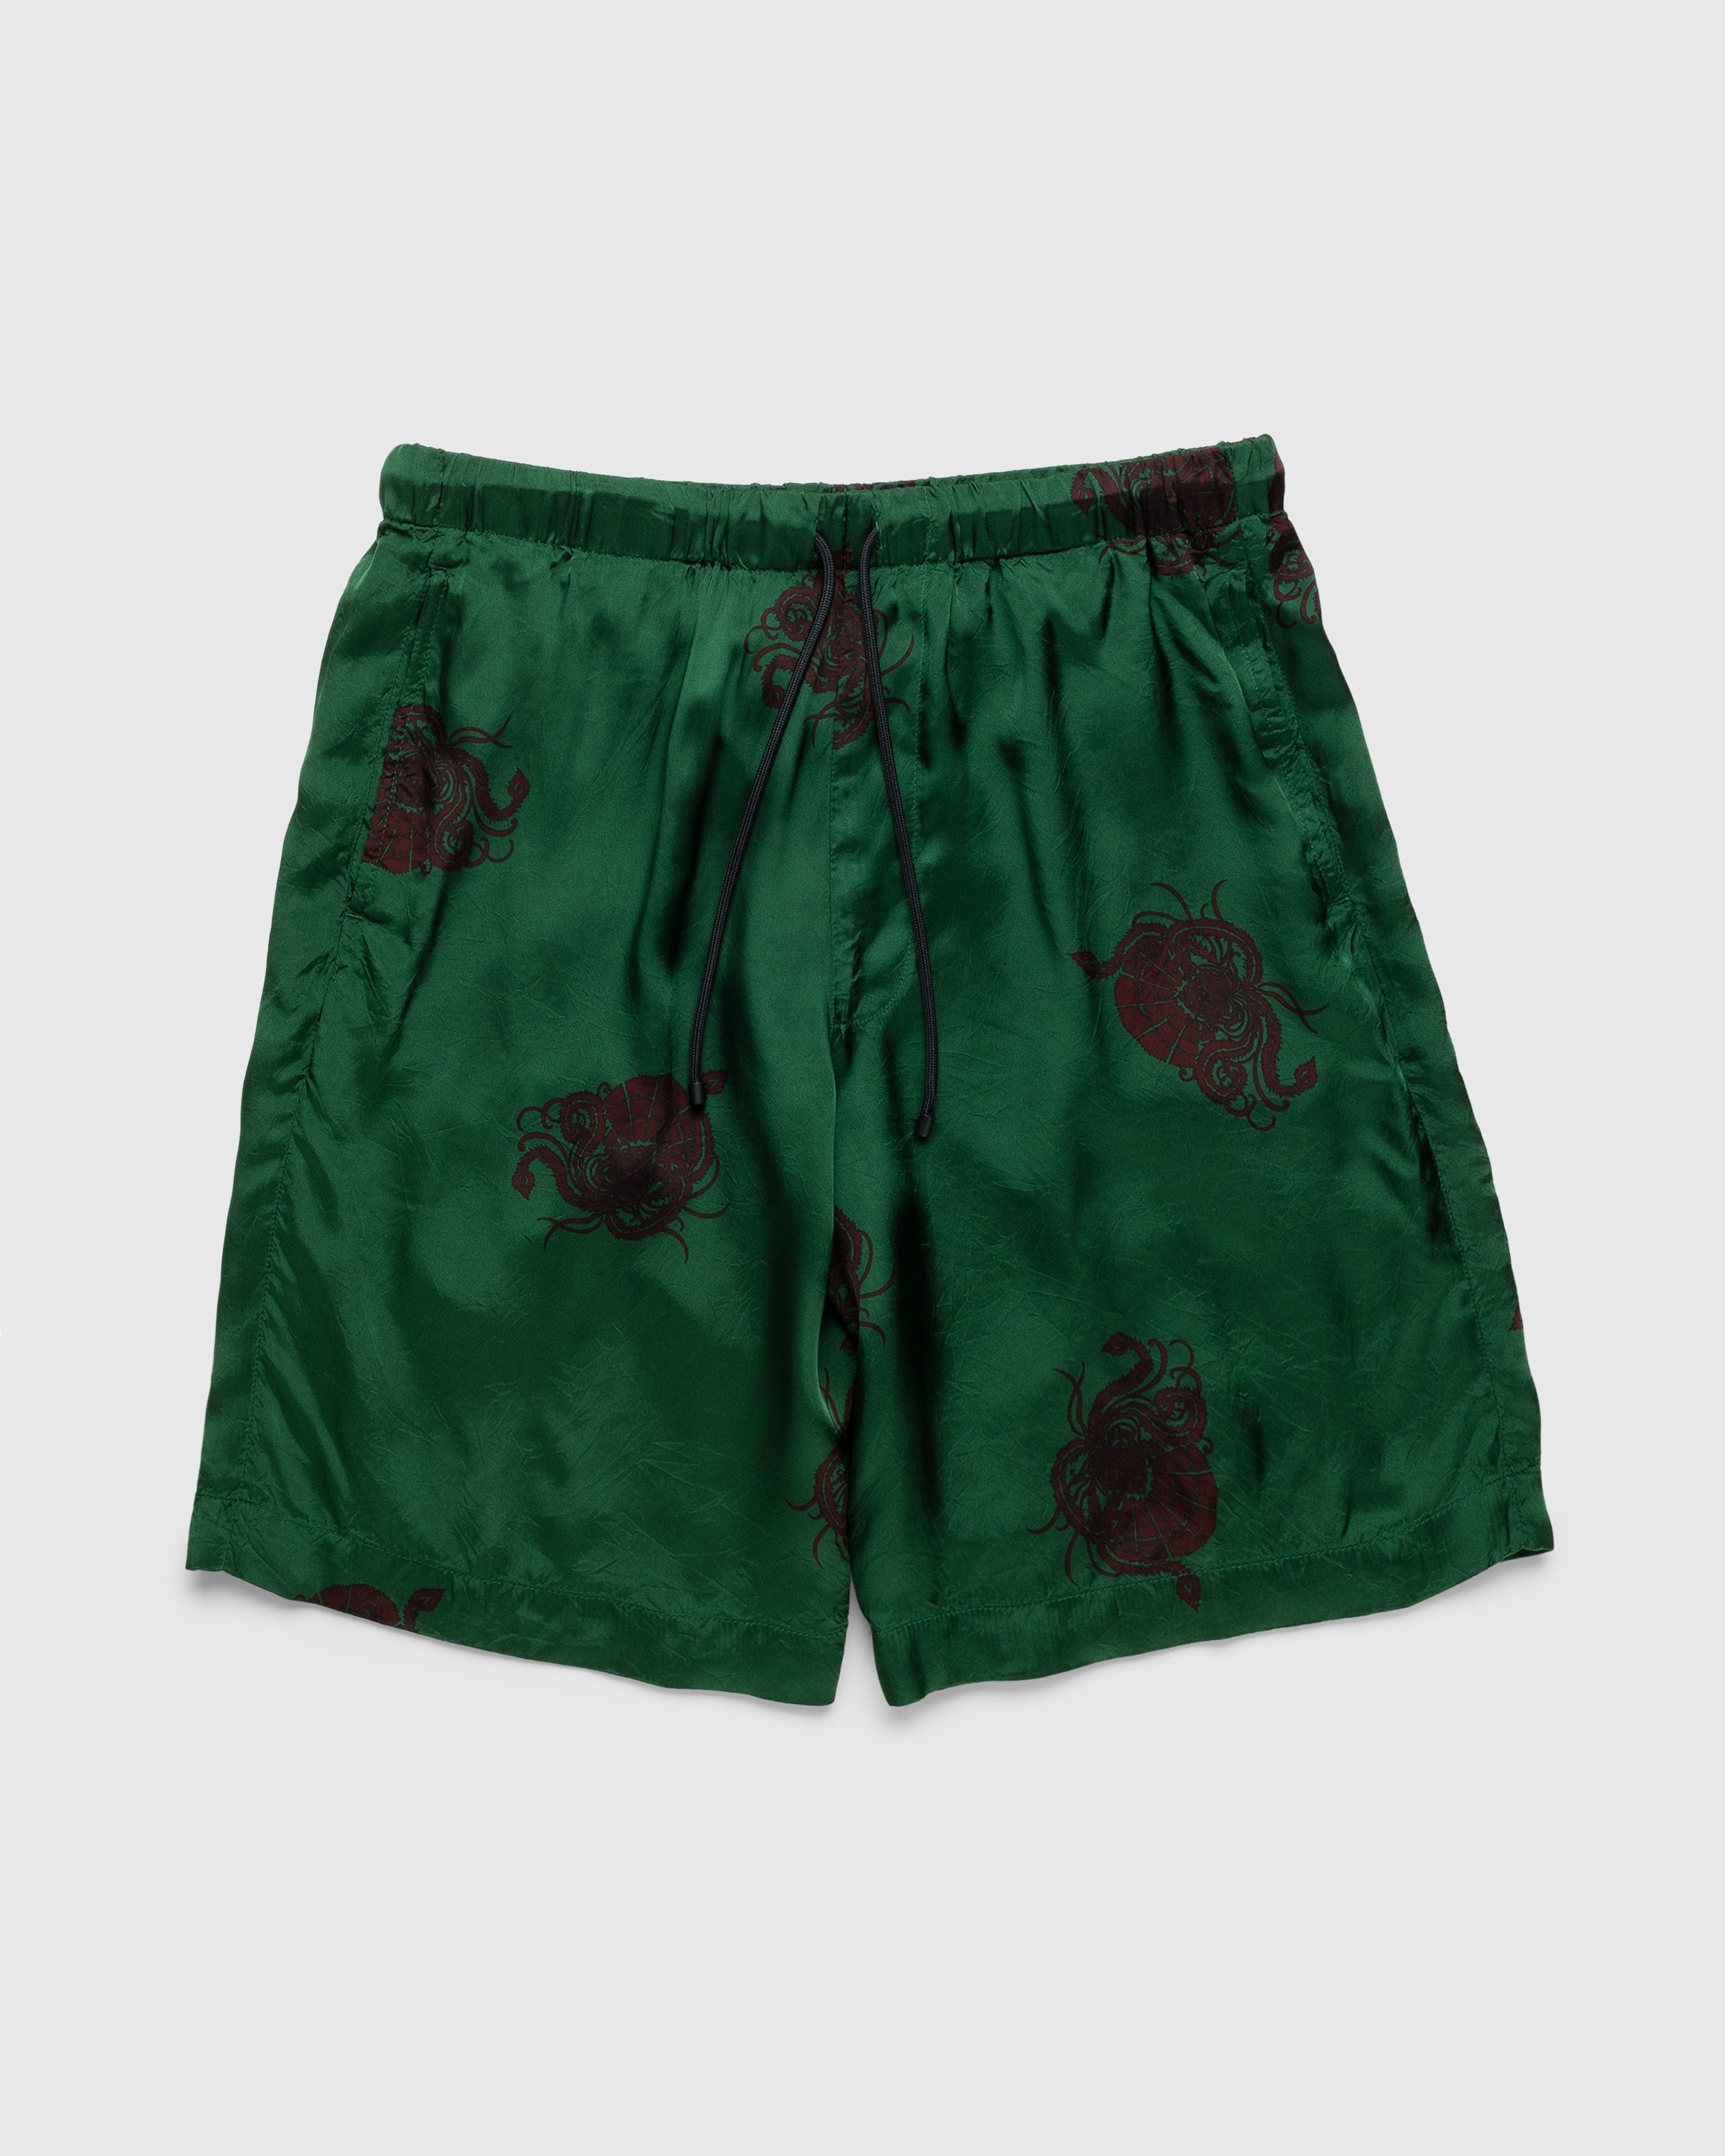 Dries van Noten – Piperi Shorts Green - Bermuda Cuts - Green - Image 1